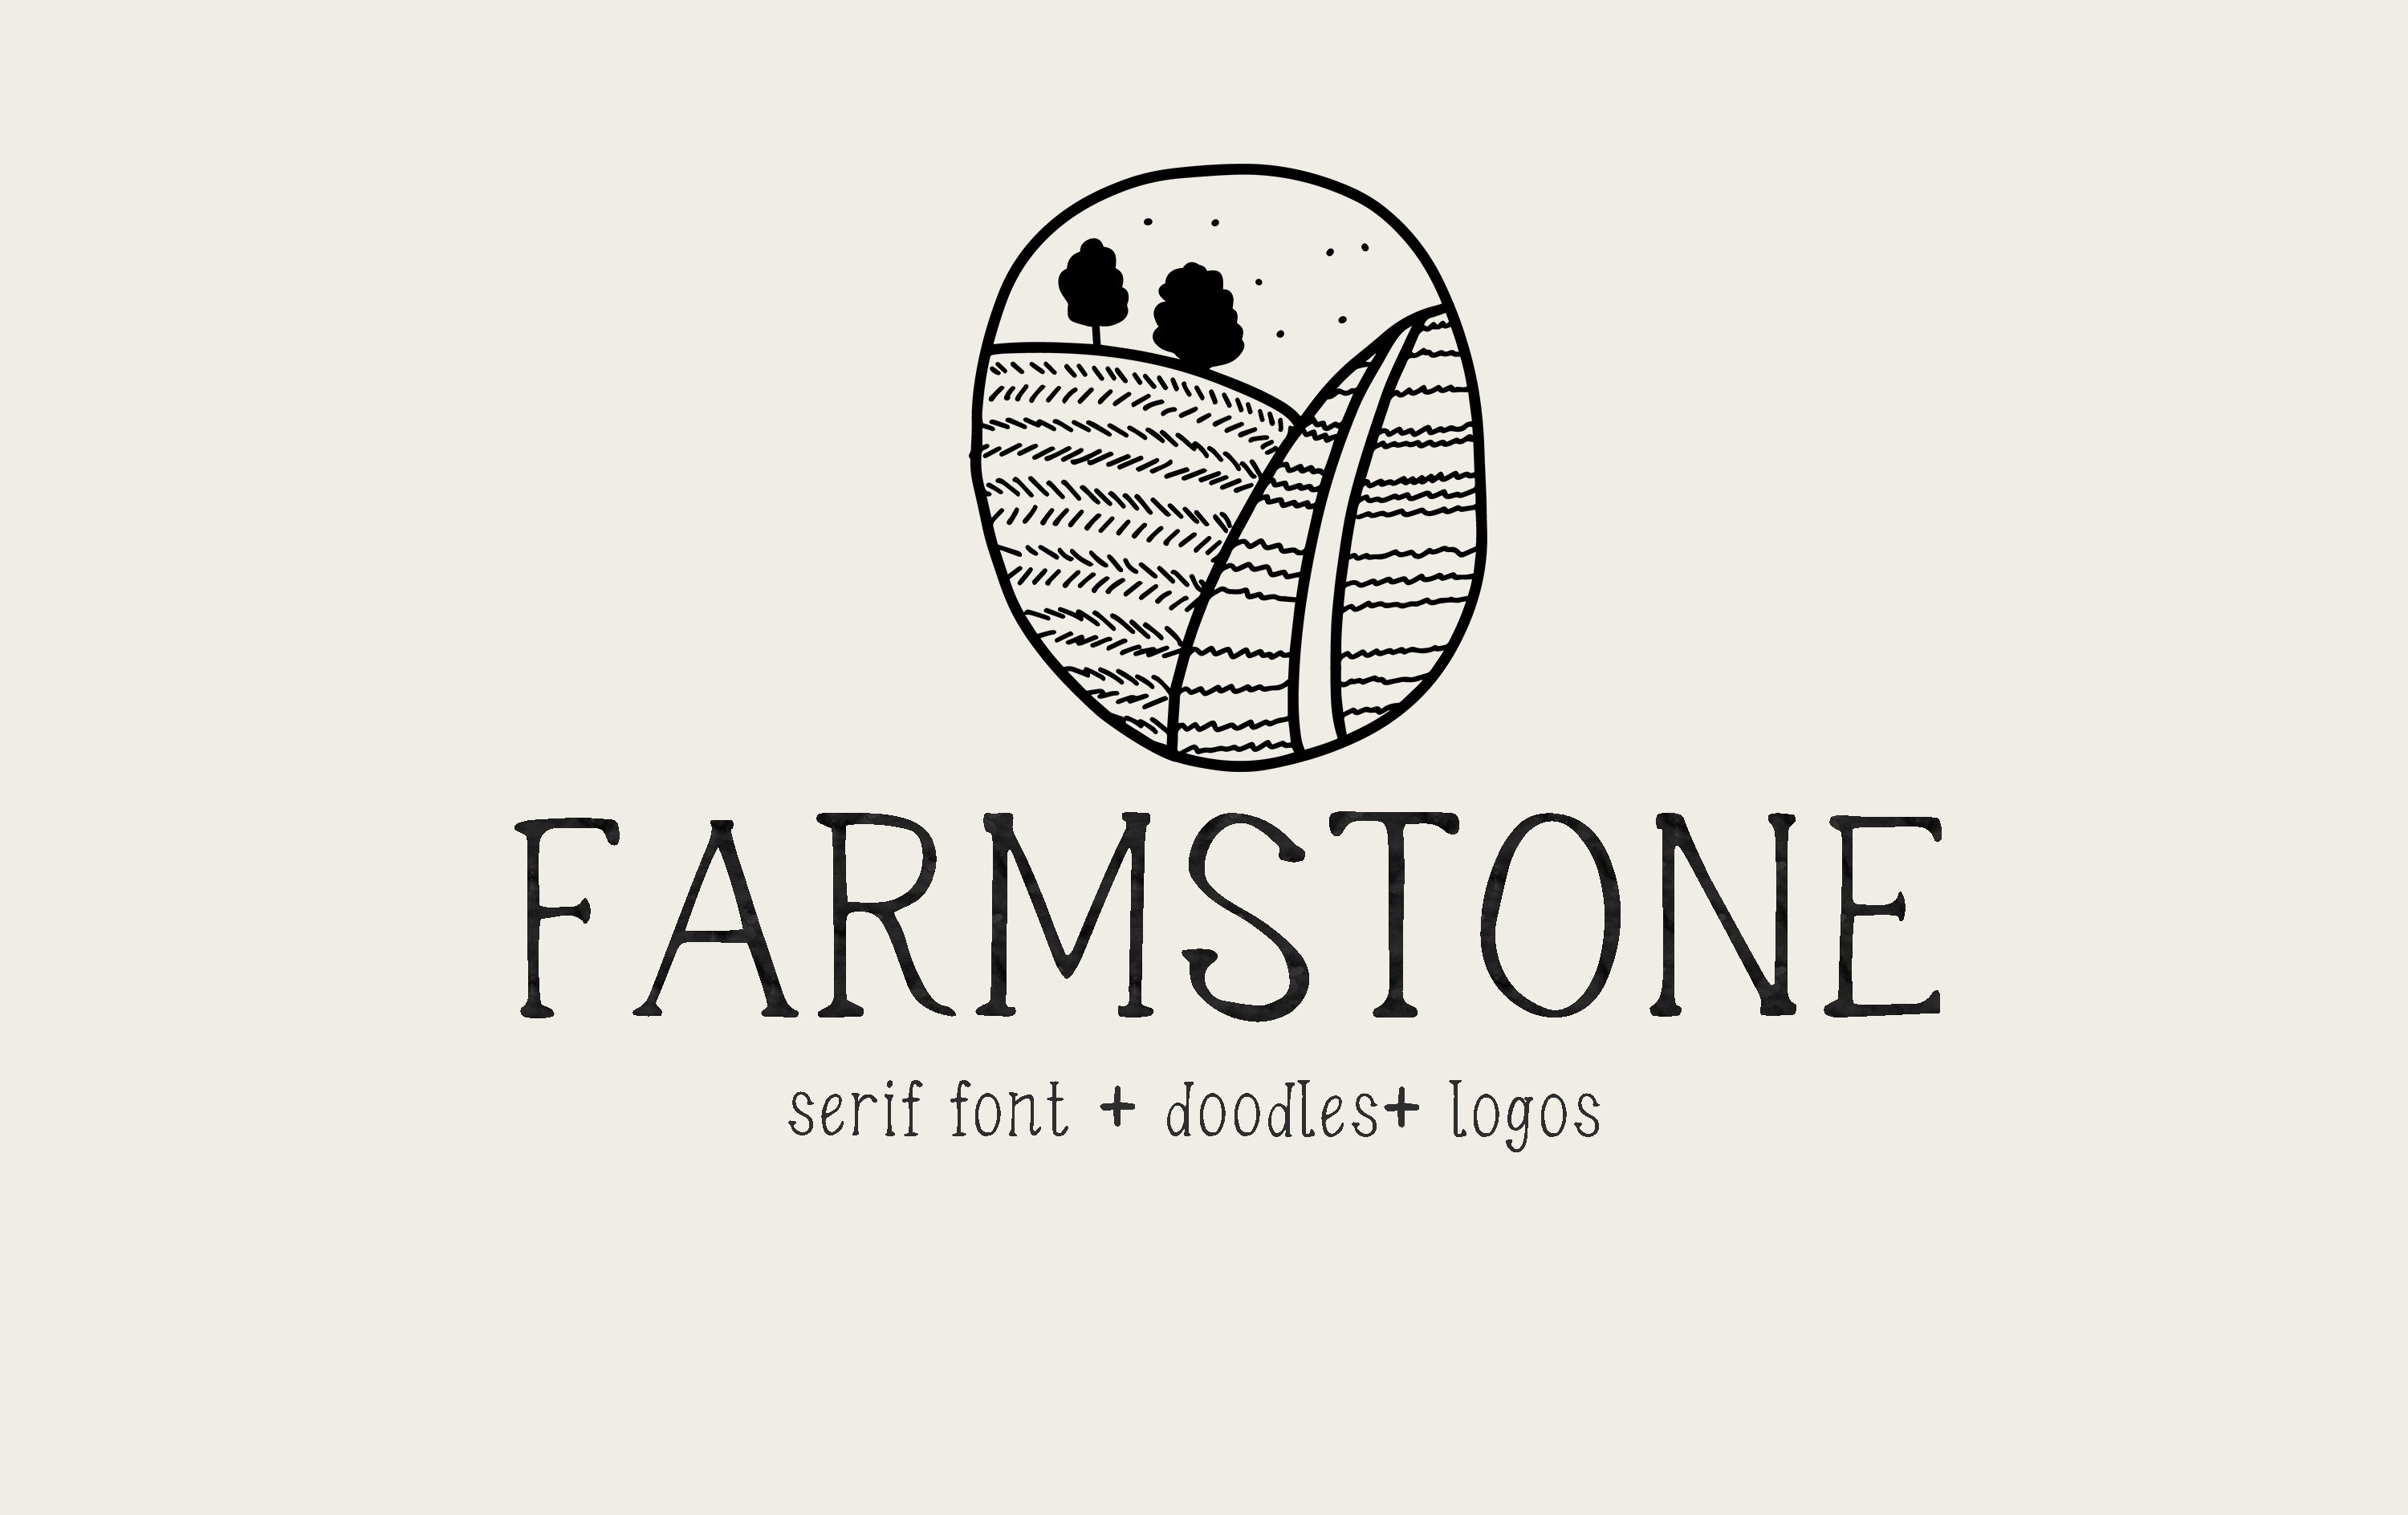 Farmstone Rustic serif font. Doodles cover image.